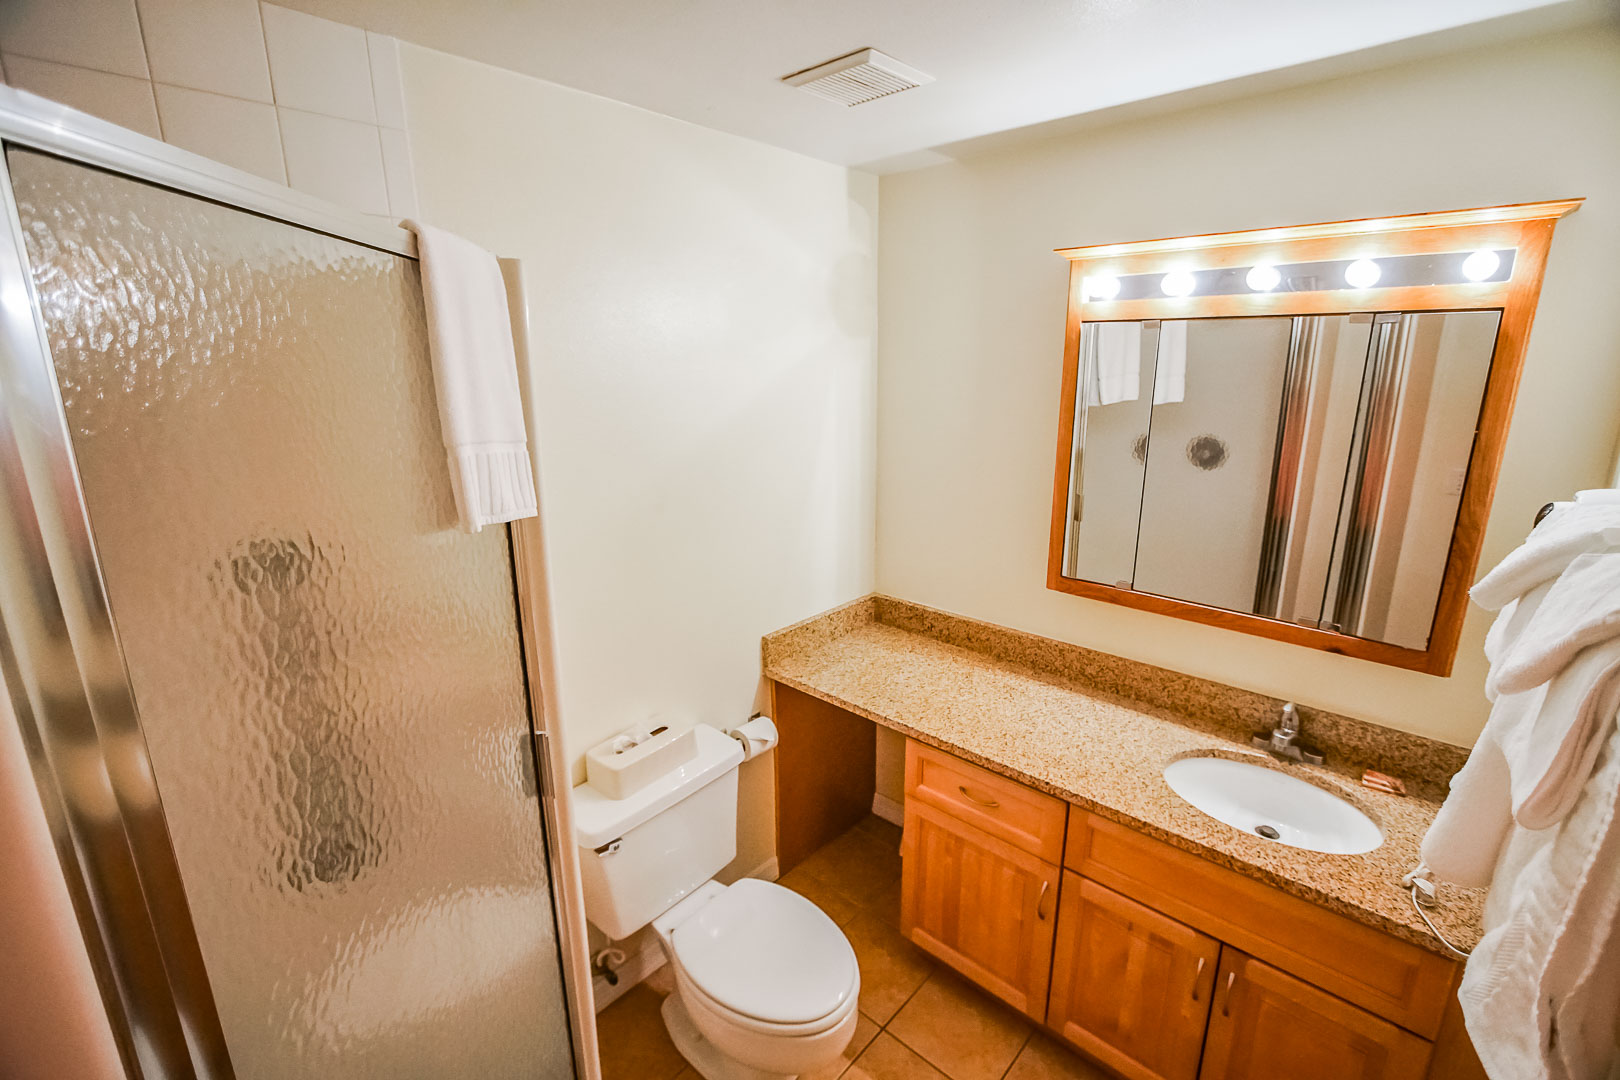 A spacious bathroom at VRI's Discovery Beach Resort in Cocoa Beach, Florida.